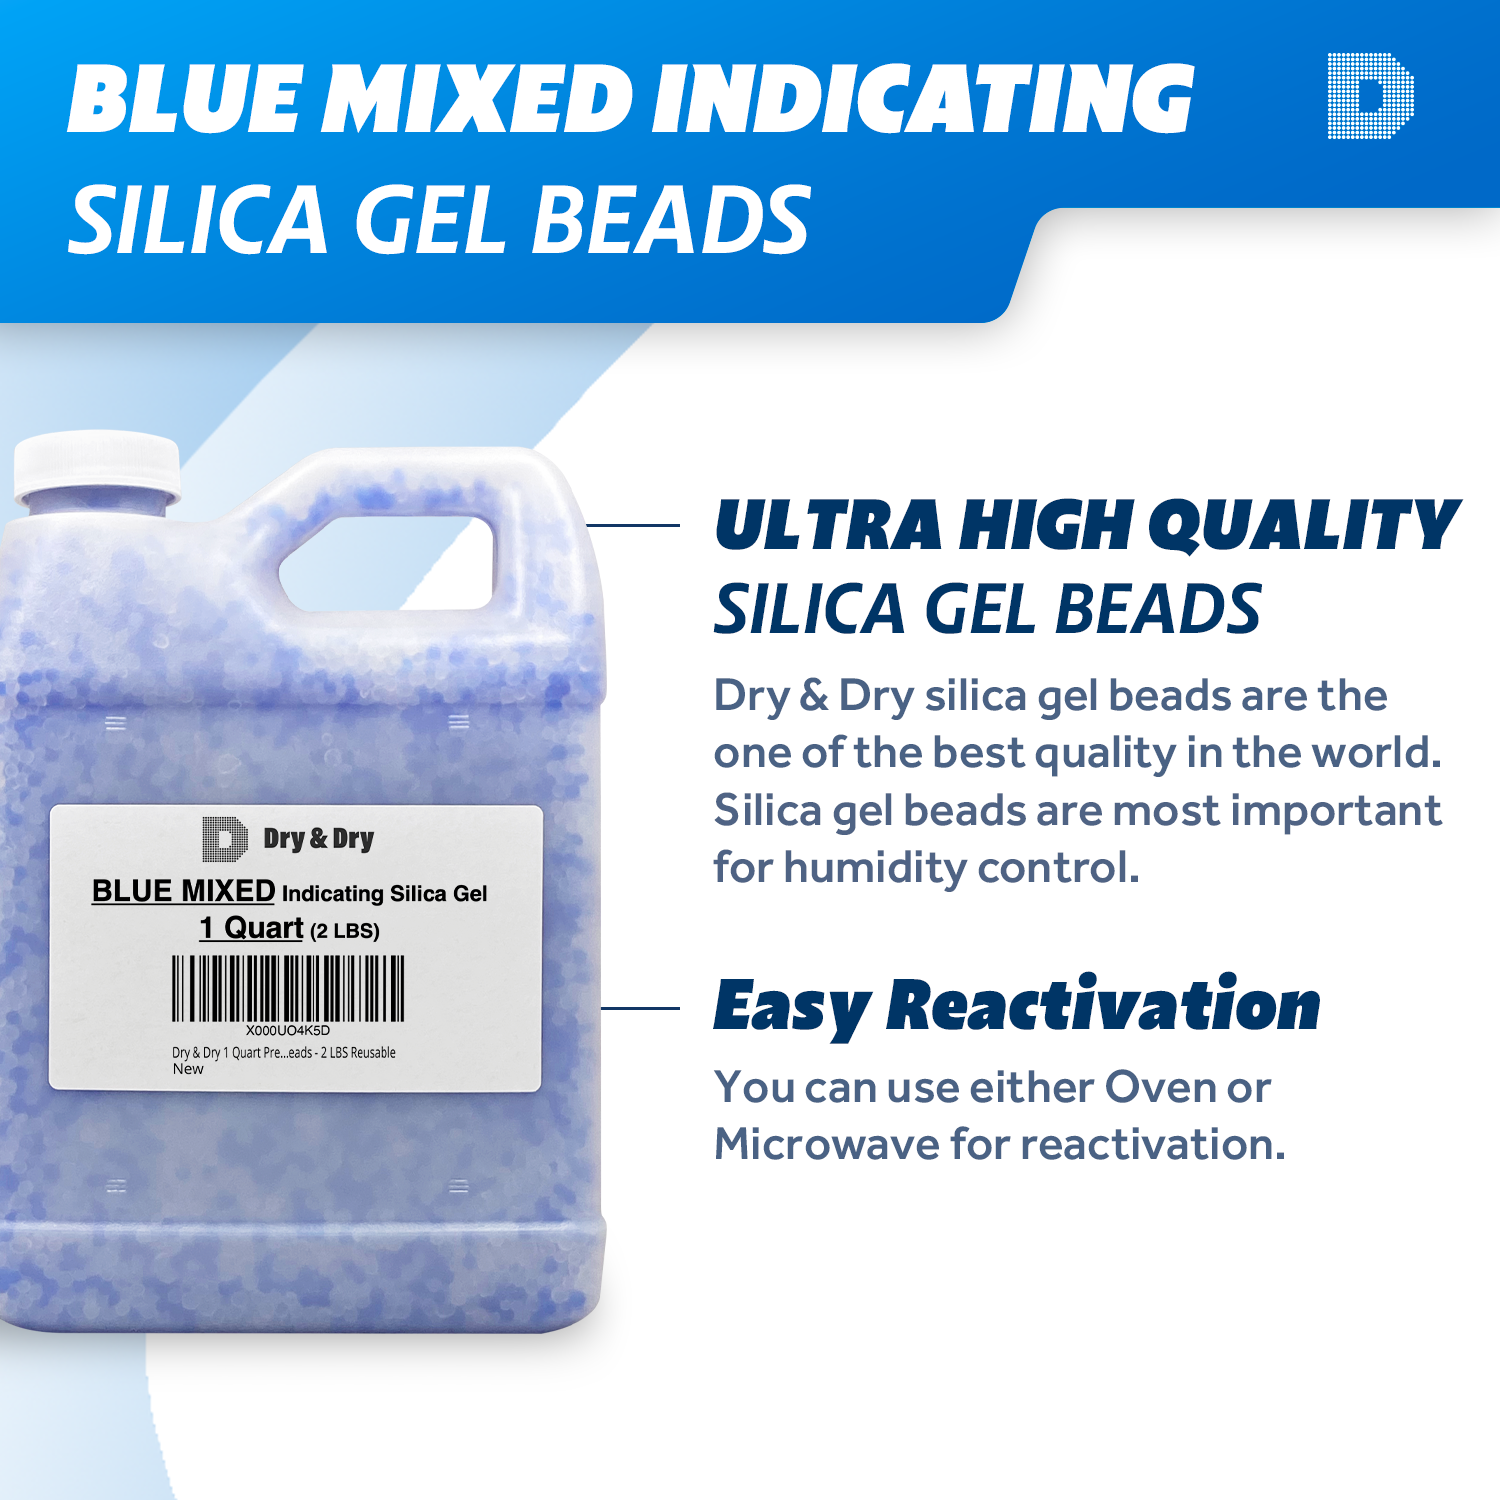 1 Quart(2 LBS) Premium White & Blue Mixed Silica Gel Beads - Rechargea